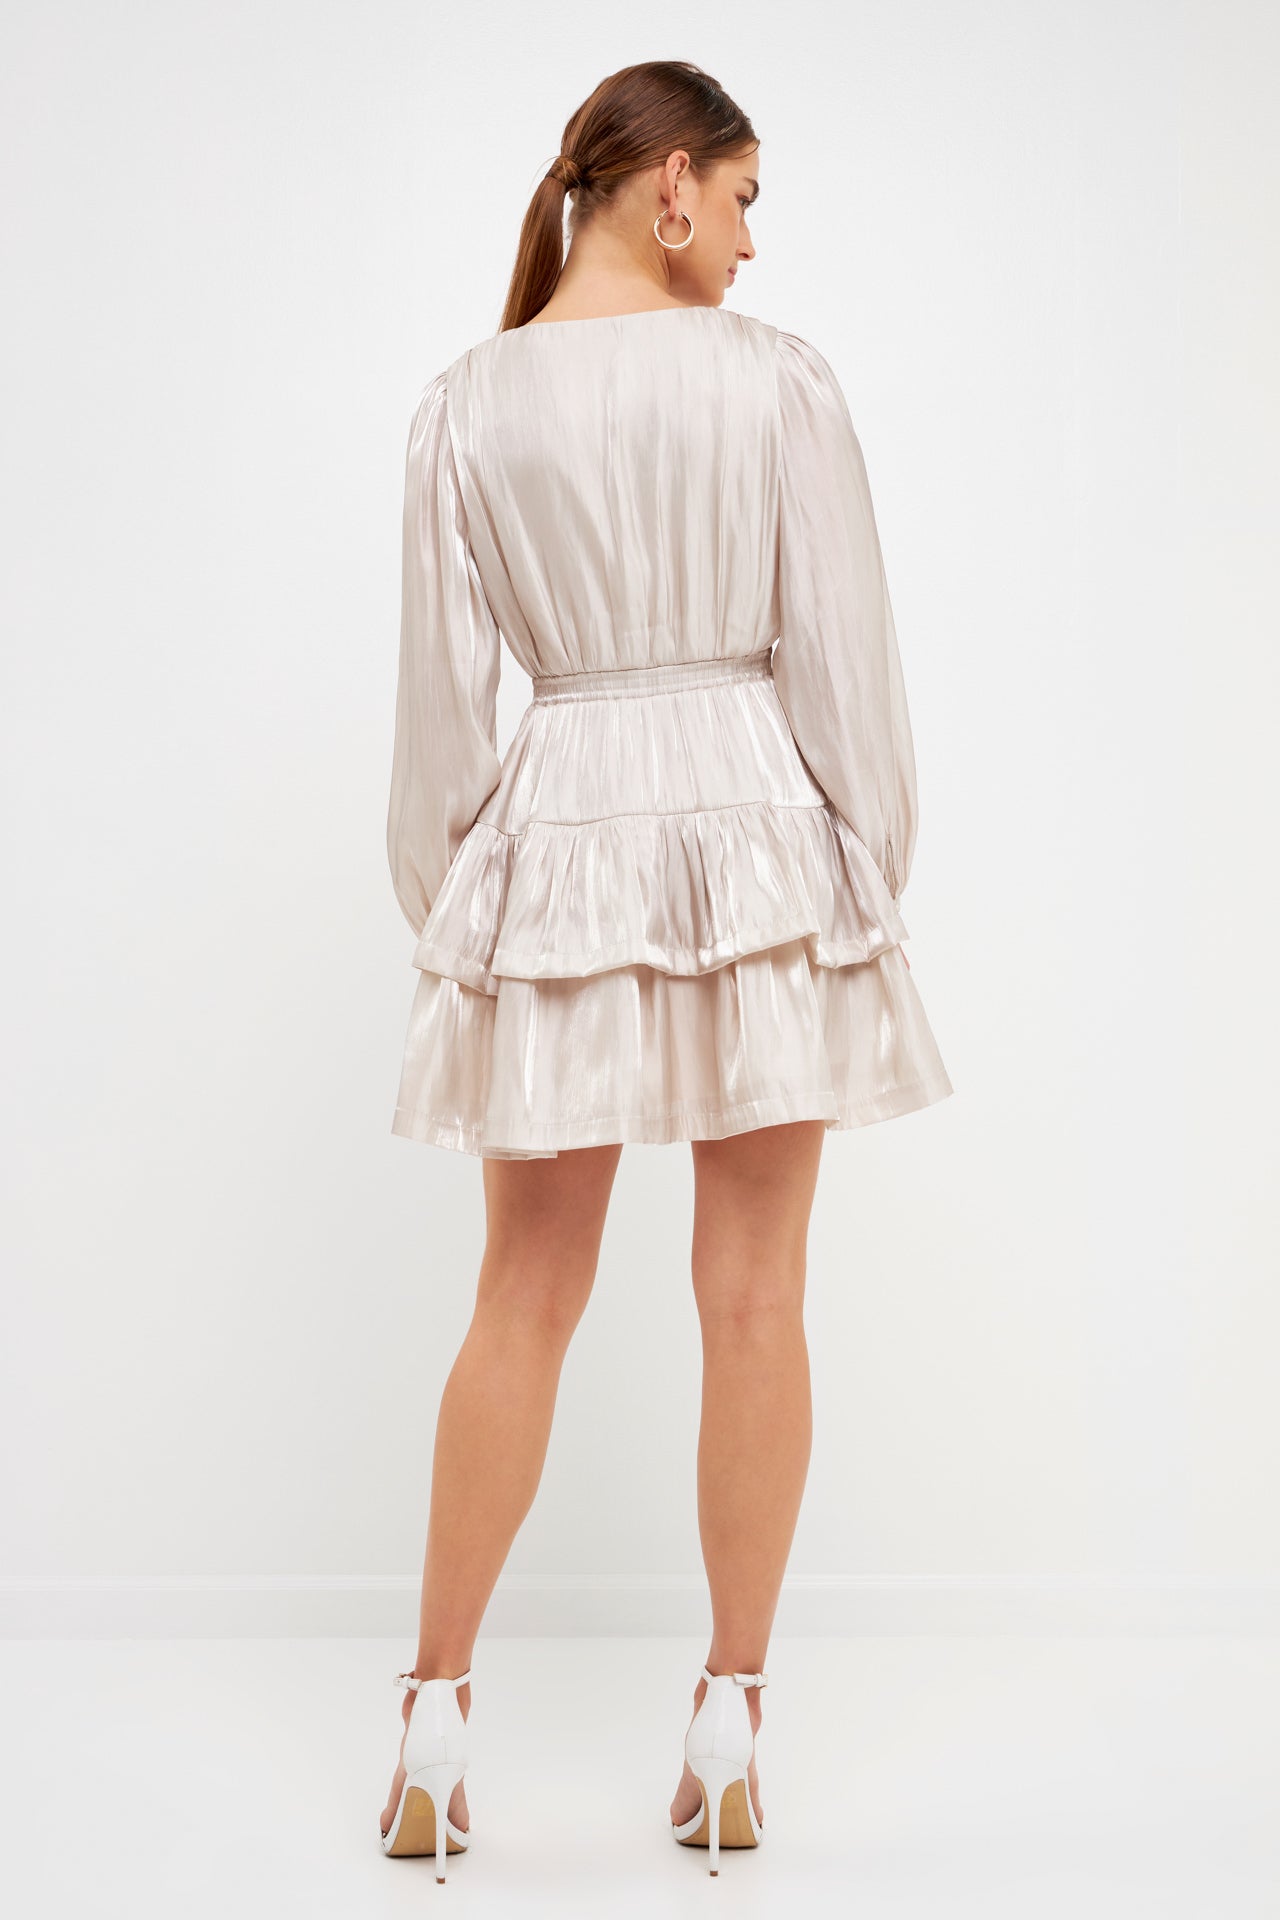 ENDLESS ROSE - Metallic Mini Dress - DRESSES available at Objectrare